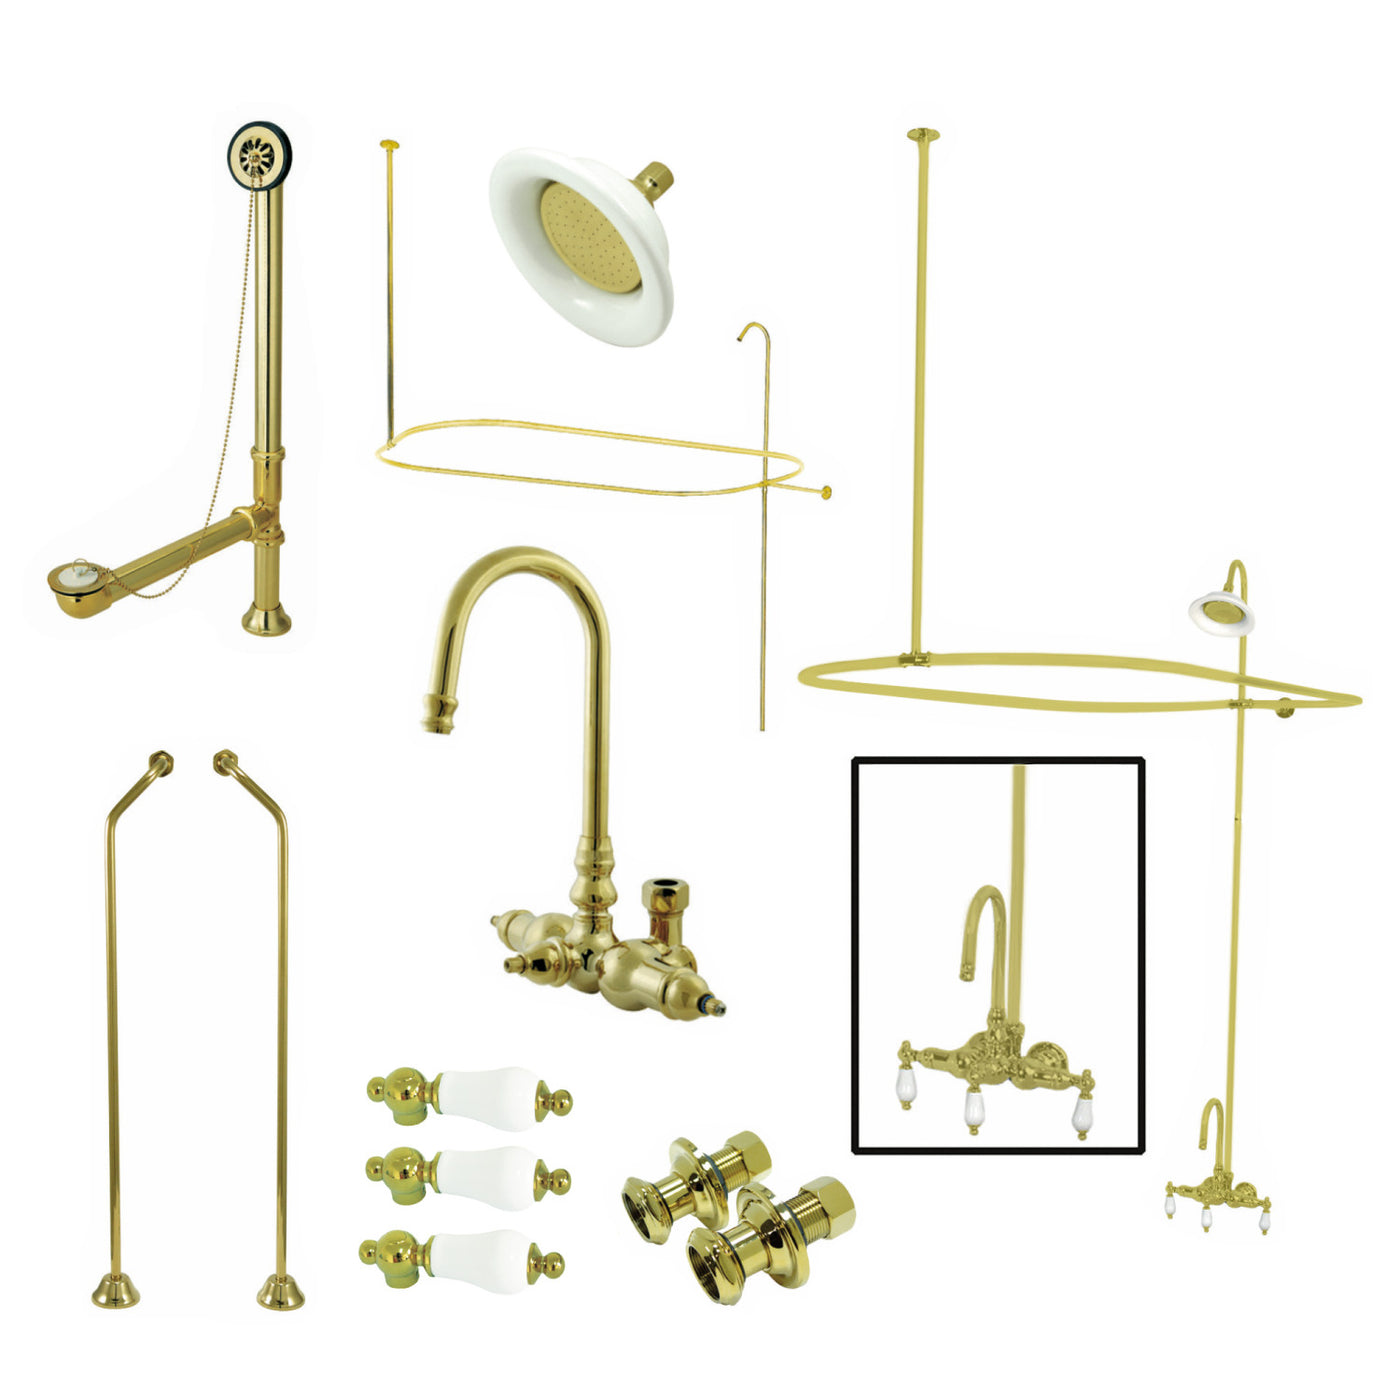 Elements of Design EDK4182PL Gooseneck Clawfoot Tub Faucet Package, Polished Brass